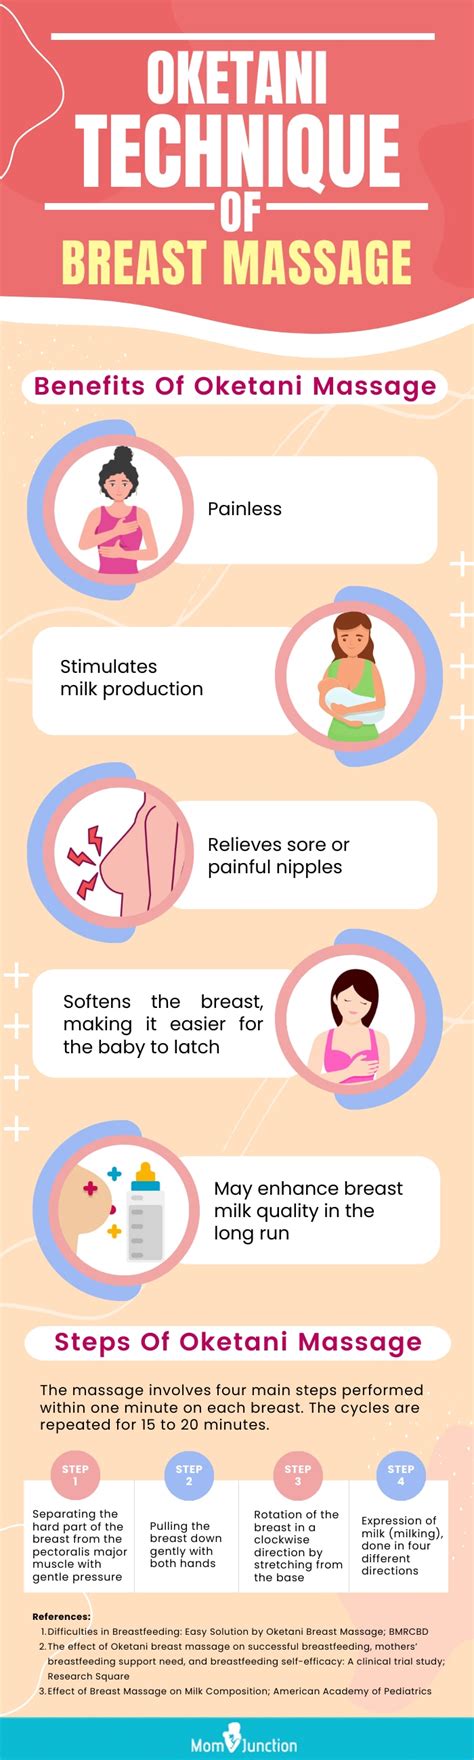 Benefits Of Lactation Massage For Breastfeeding Moms